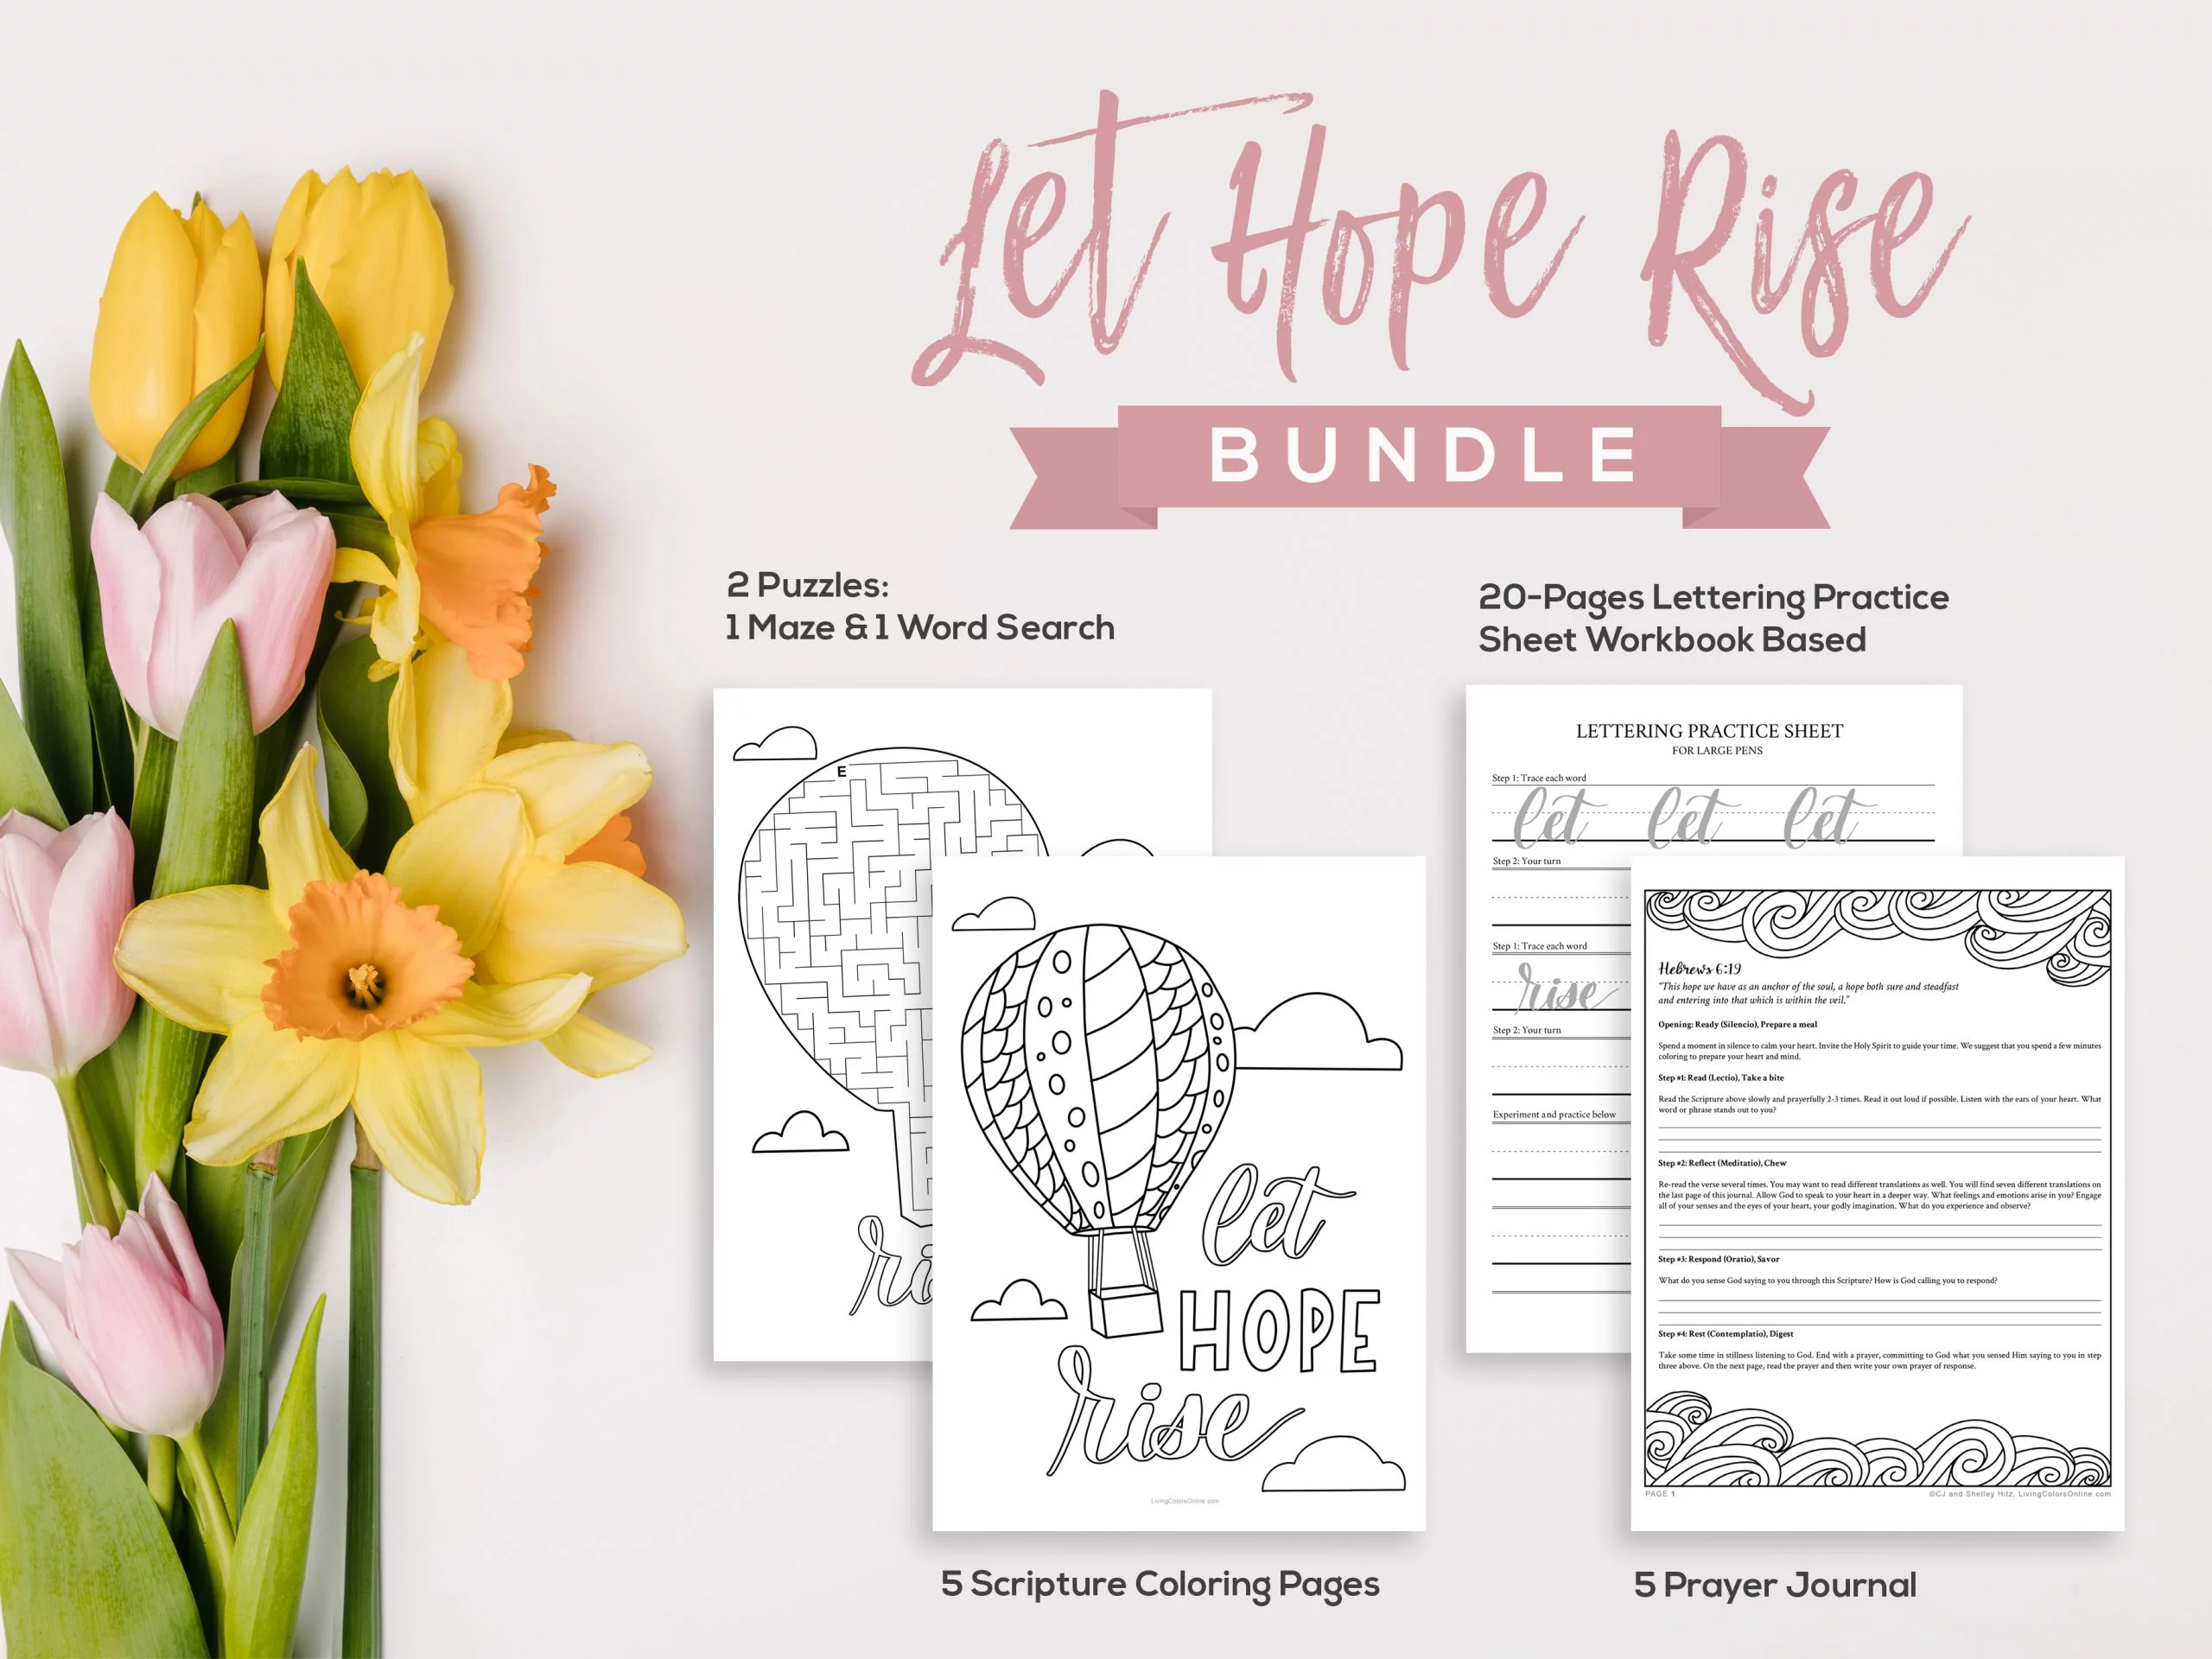 let hope rise bundle image discouraged to hope